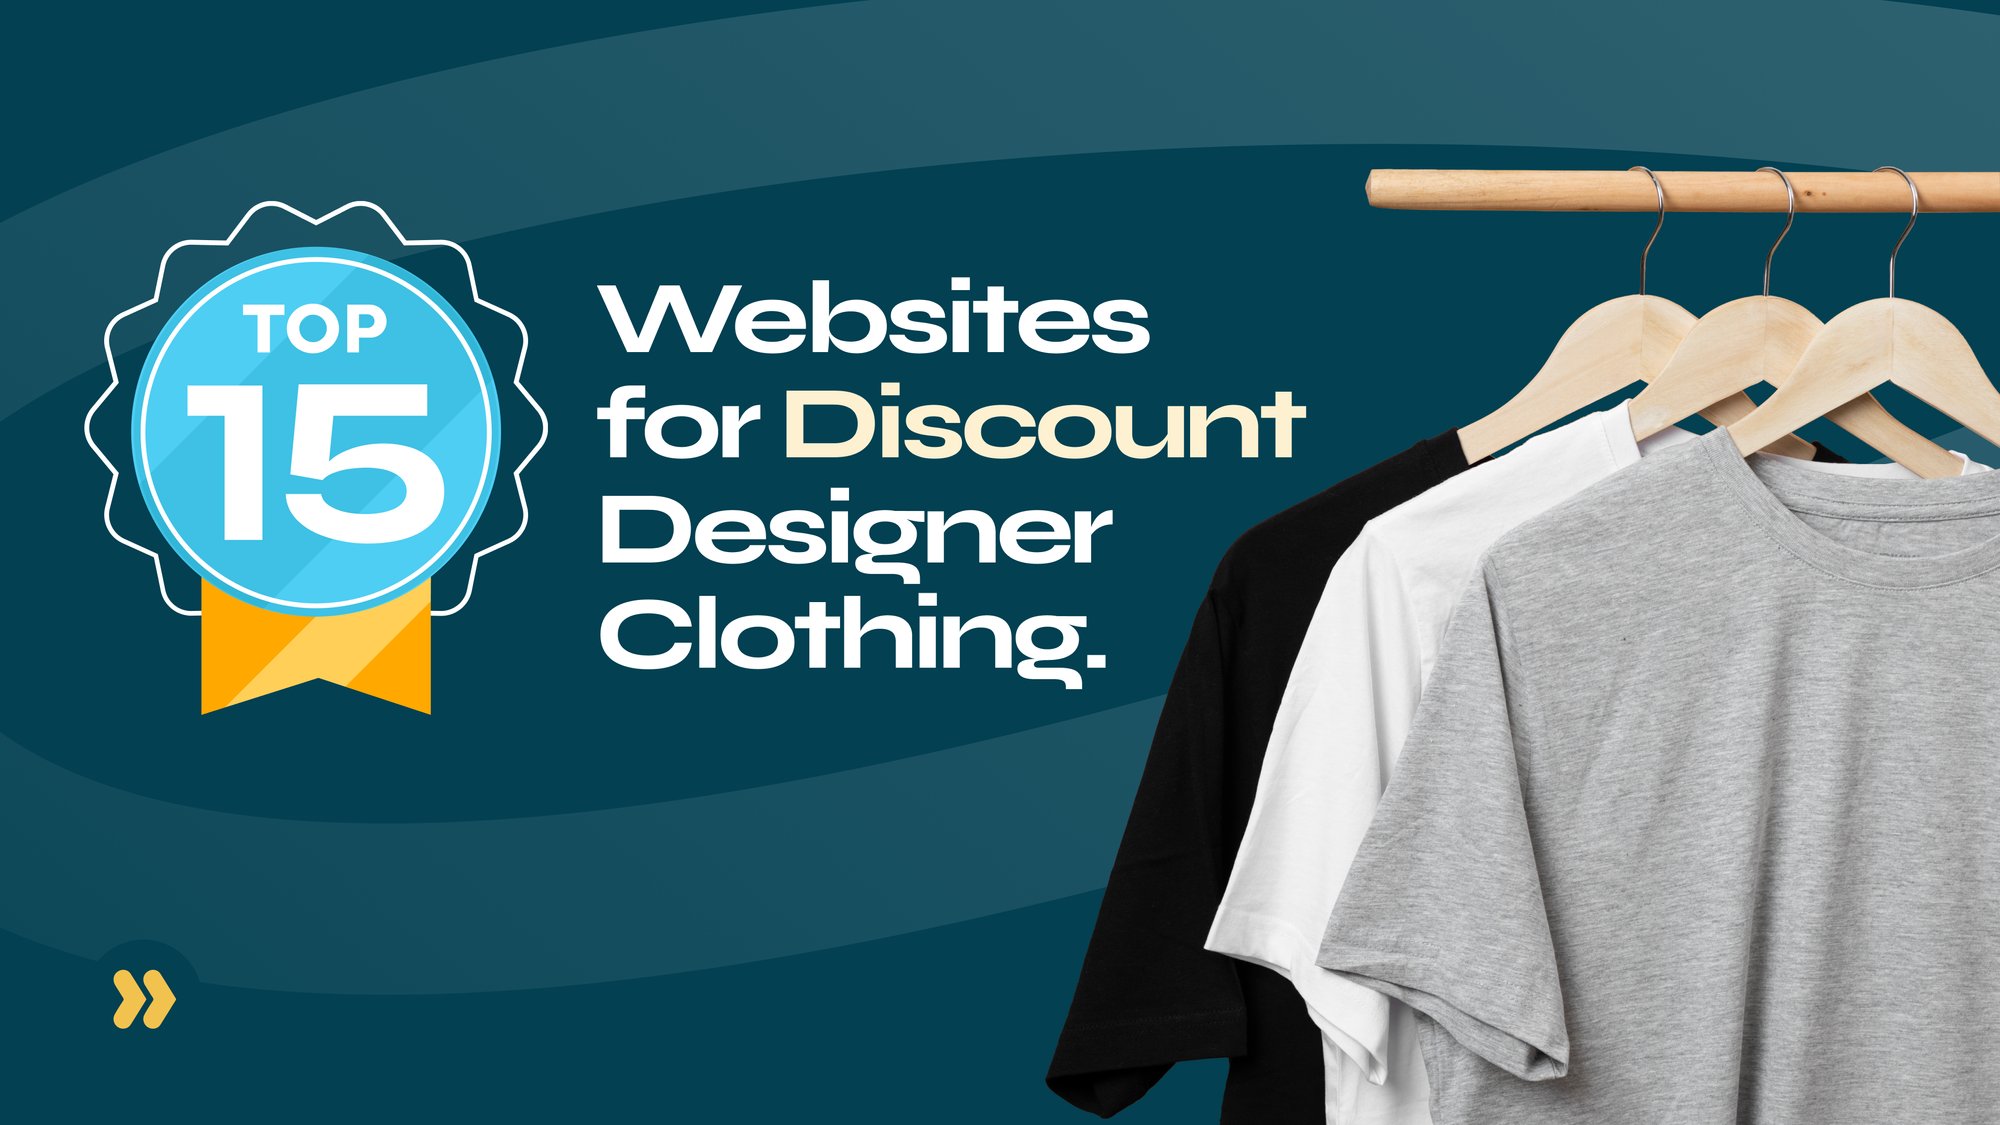 Top 15 Websites for Discount Designer Clothing